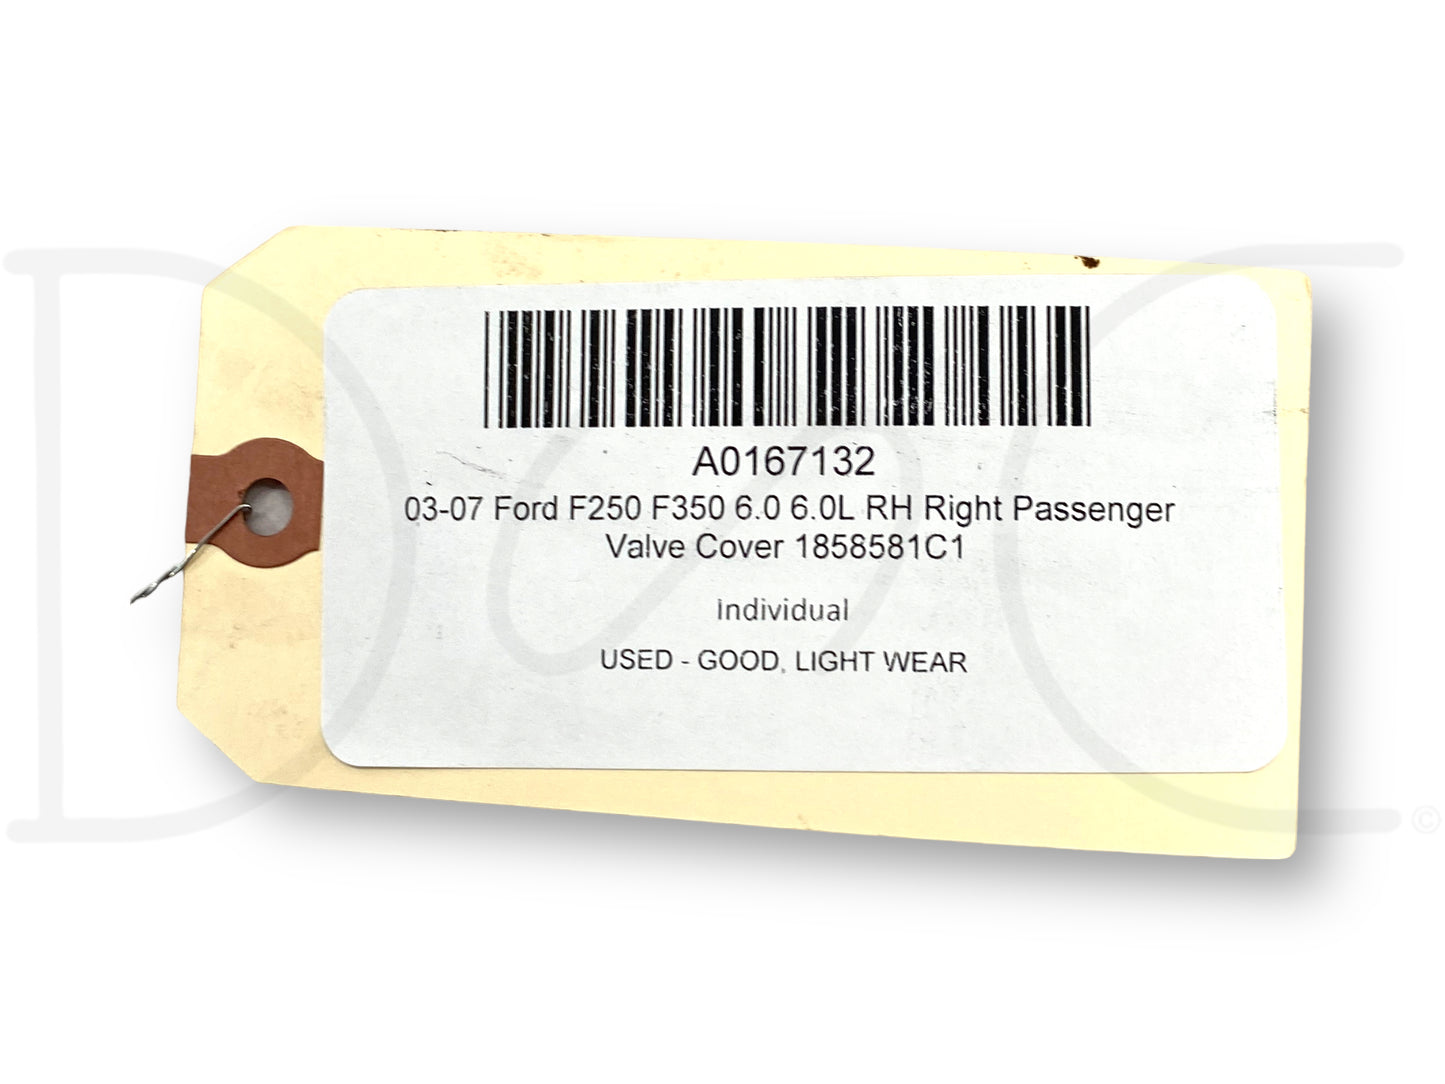 04-07 Ford F250 F350 6.0 6.0L RH Right Passenger Valve Cover 1858581C1